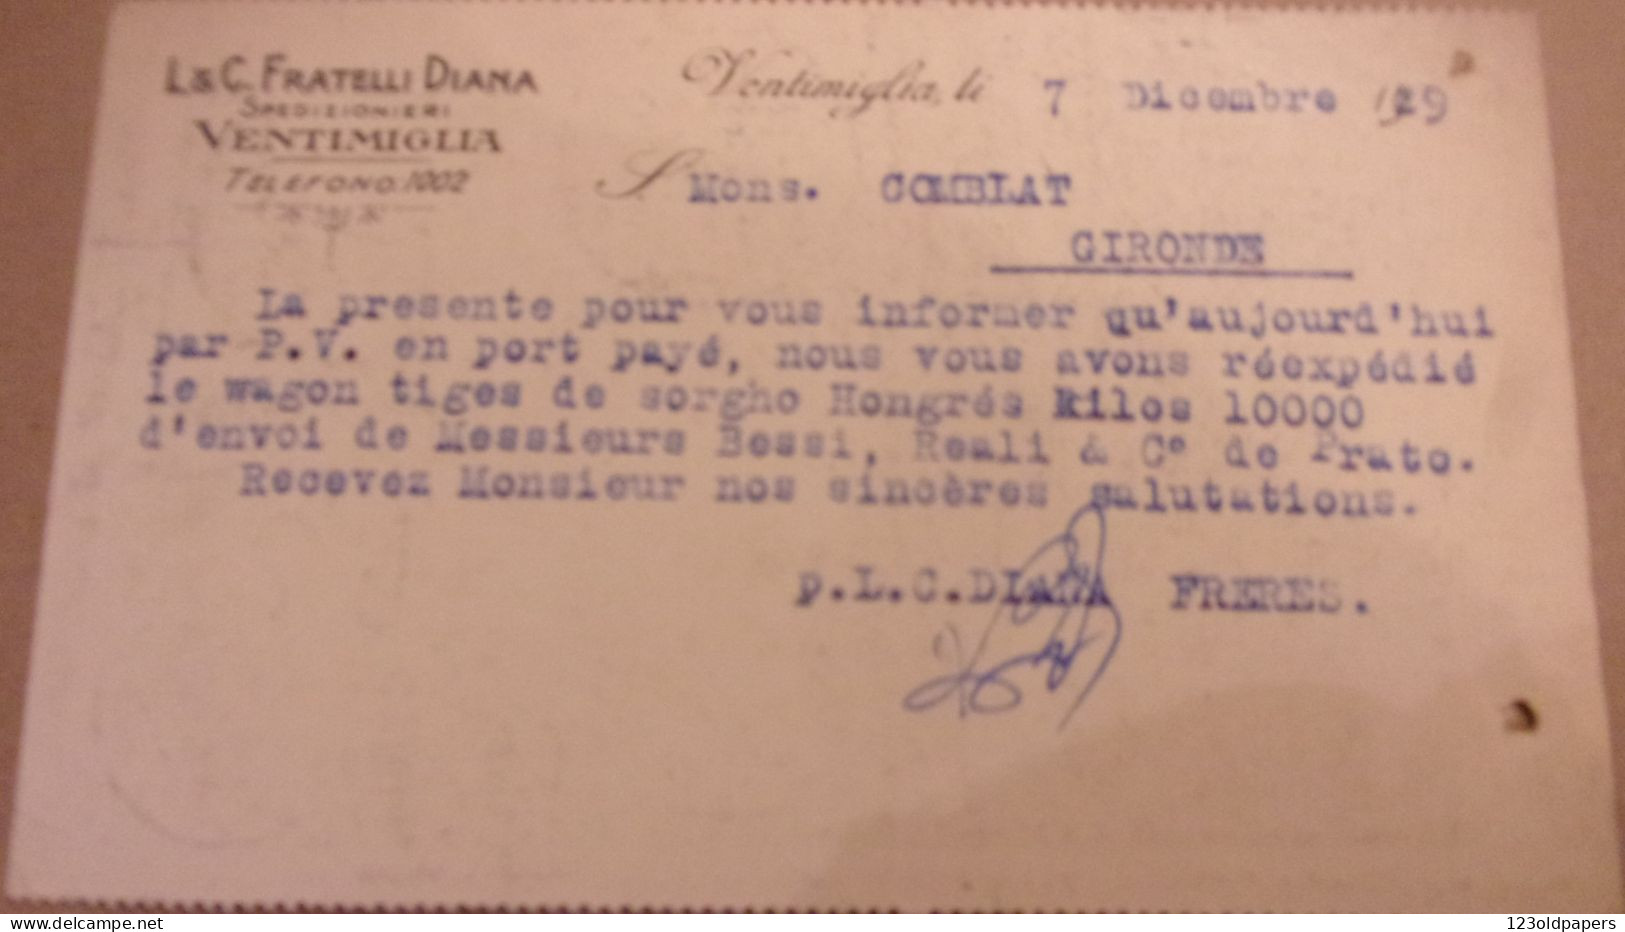 VENTIMIGLIA - IMPERIA - CARTOLINA COMMERCIALE "L.& C. FRATELLI DIANA" TRASPORTI INTERNAZIONALI - 1929 - Storia Postale